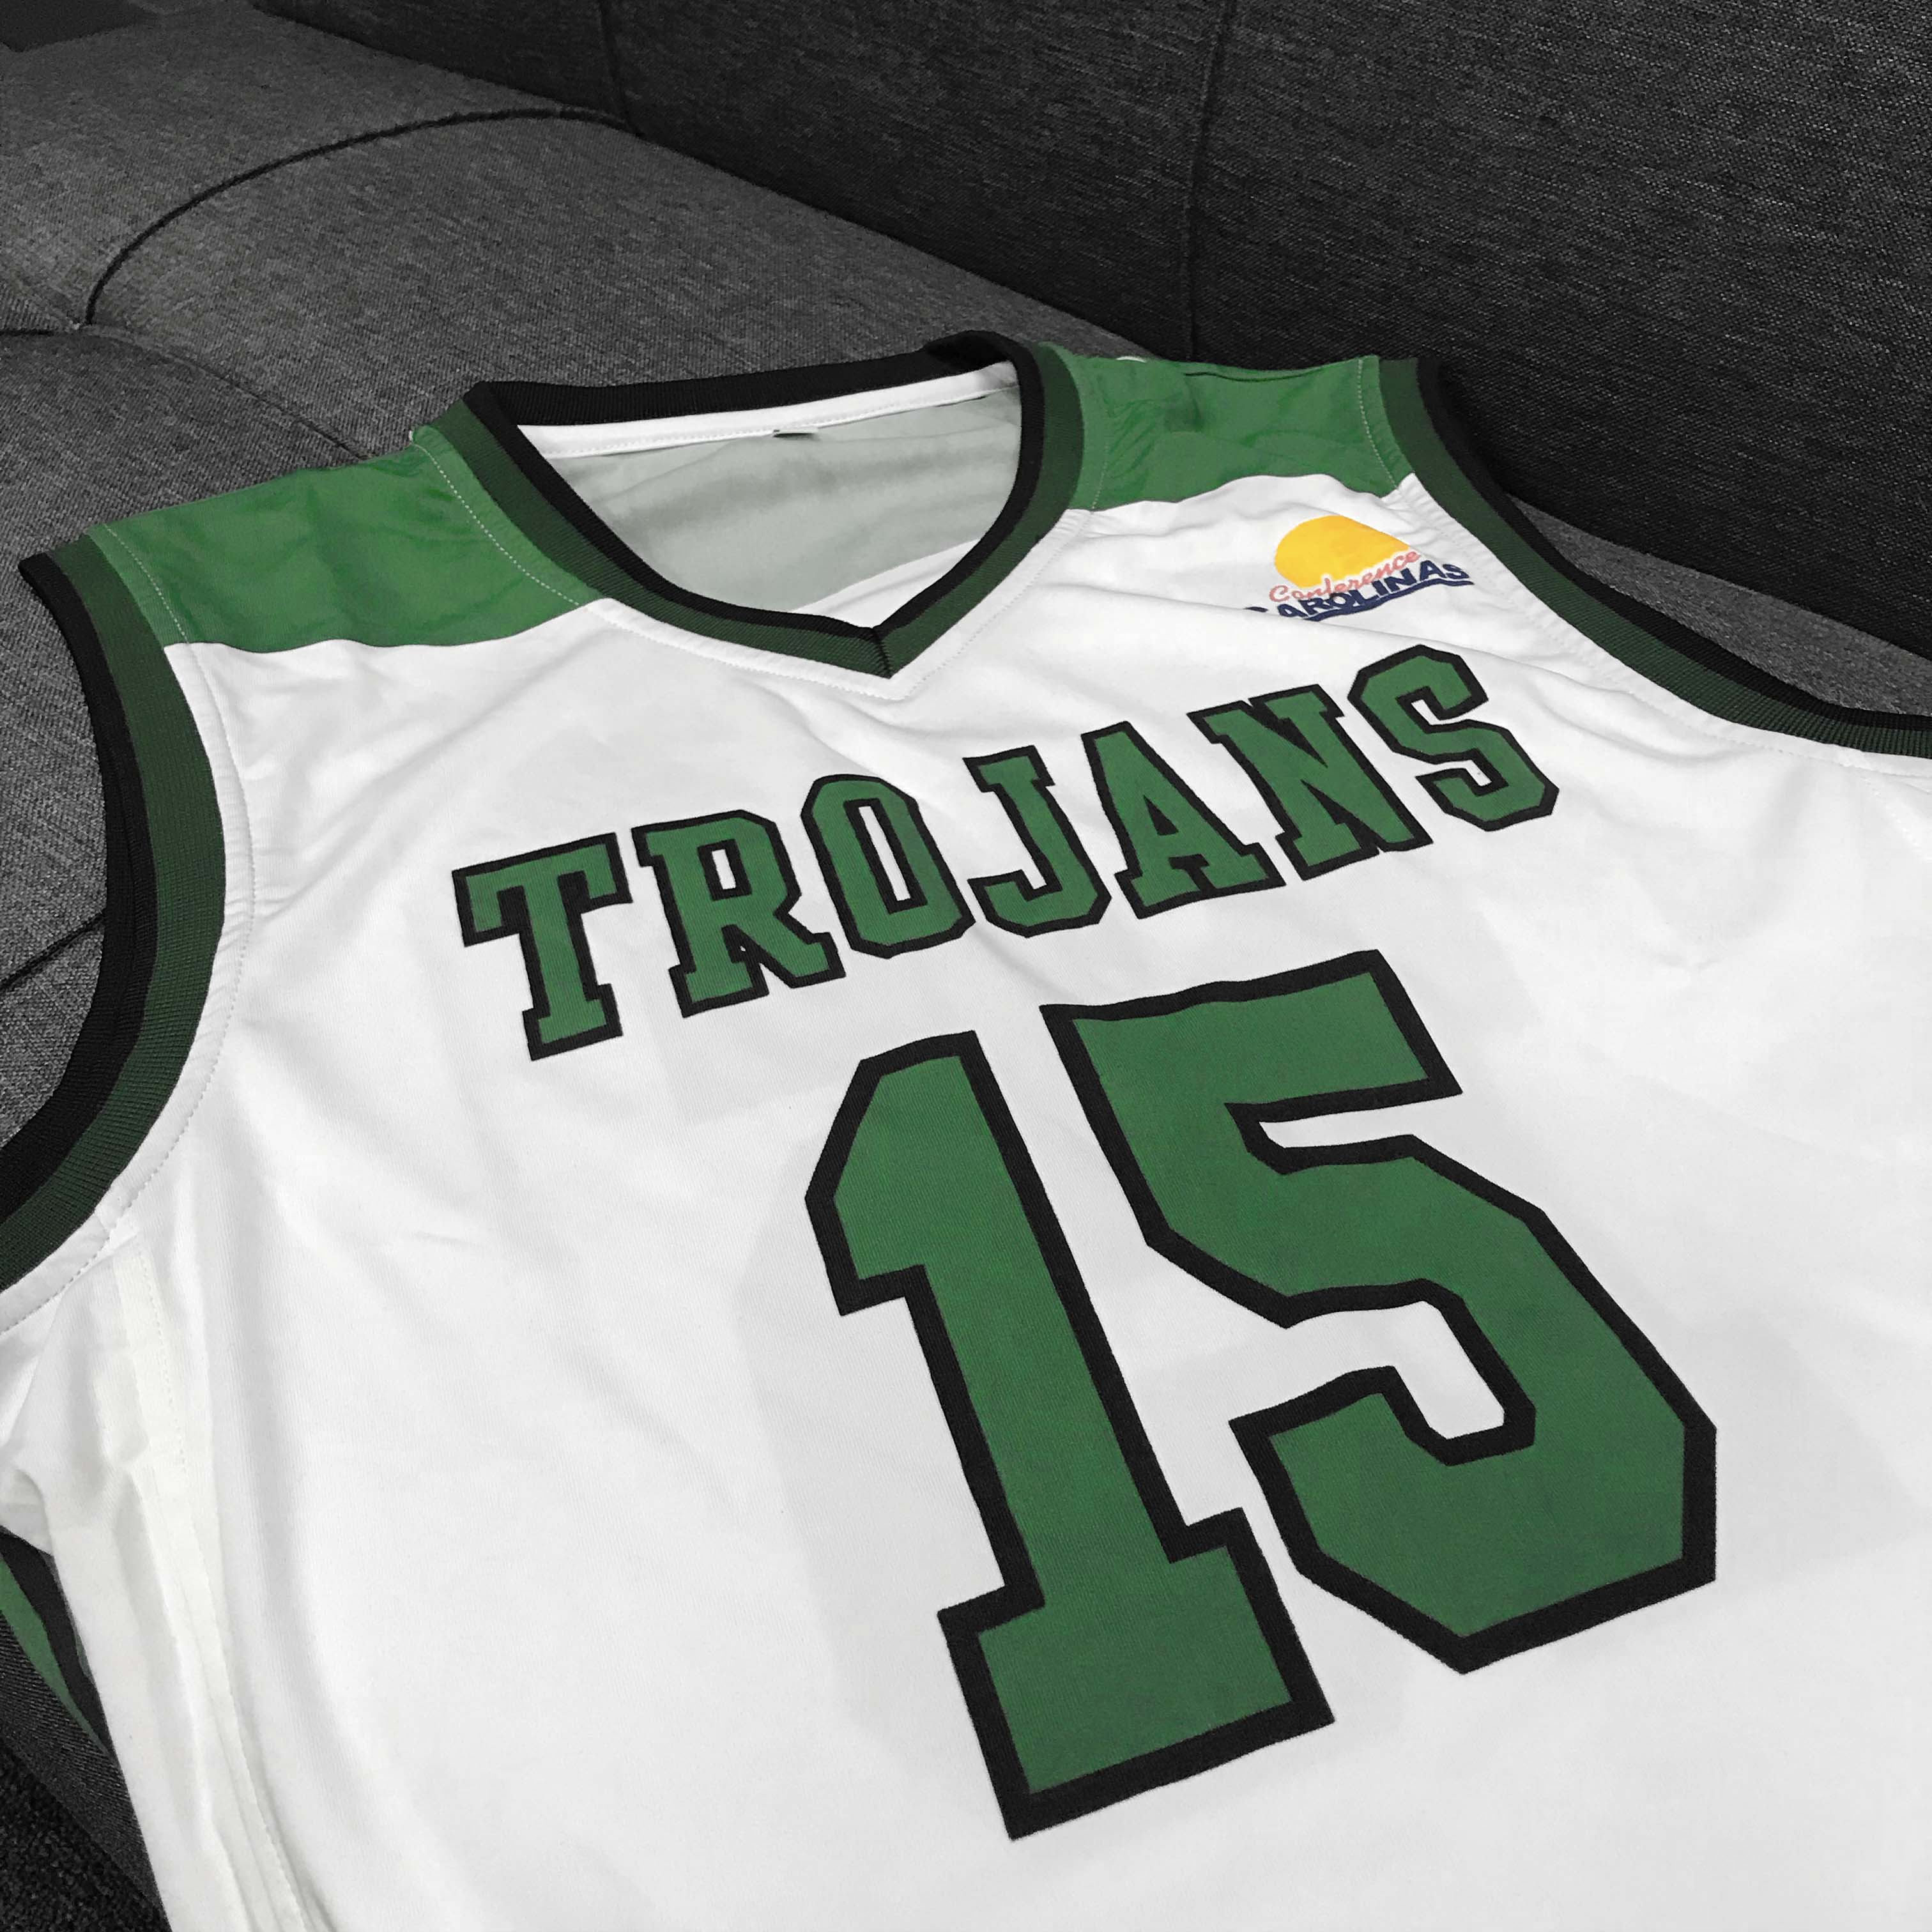 Trojans 15 Sports jersey.